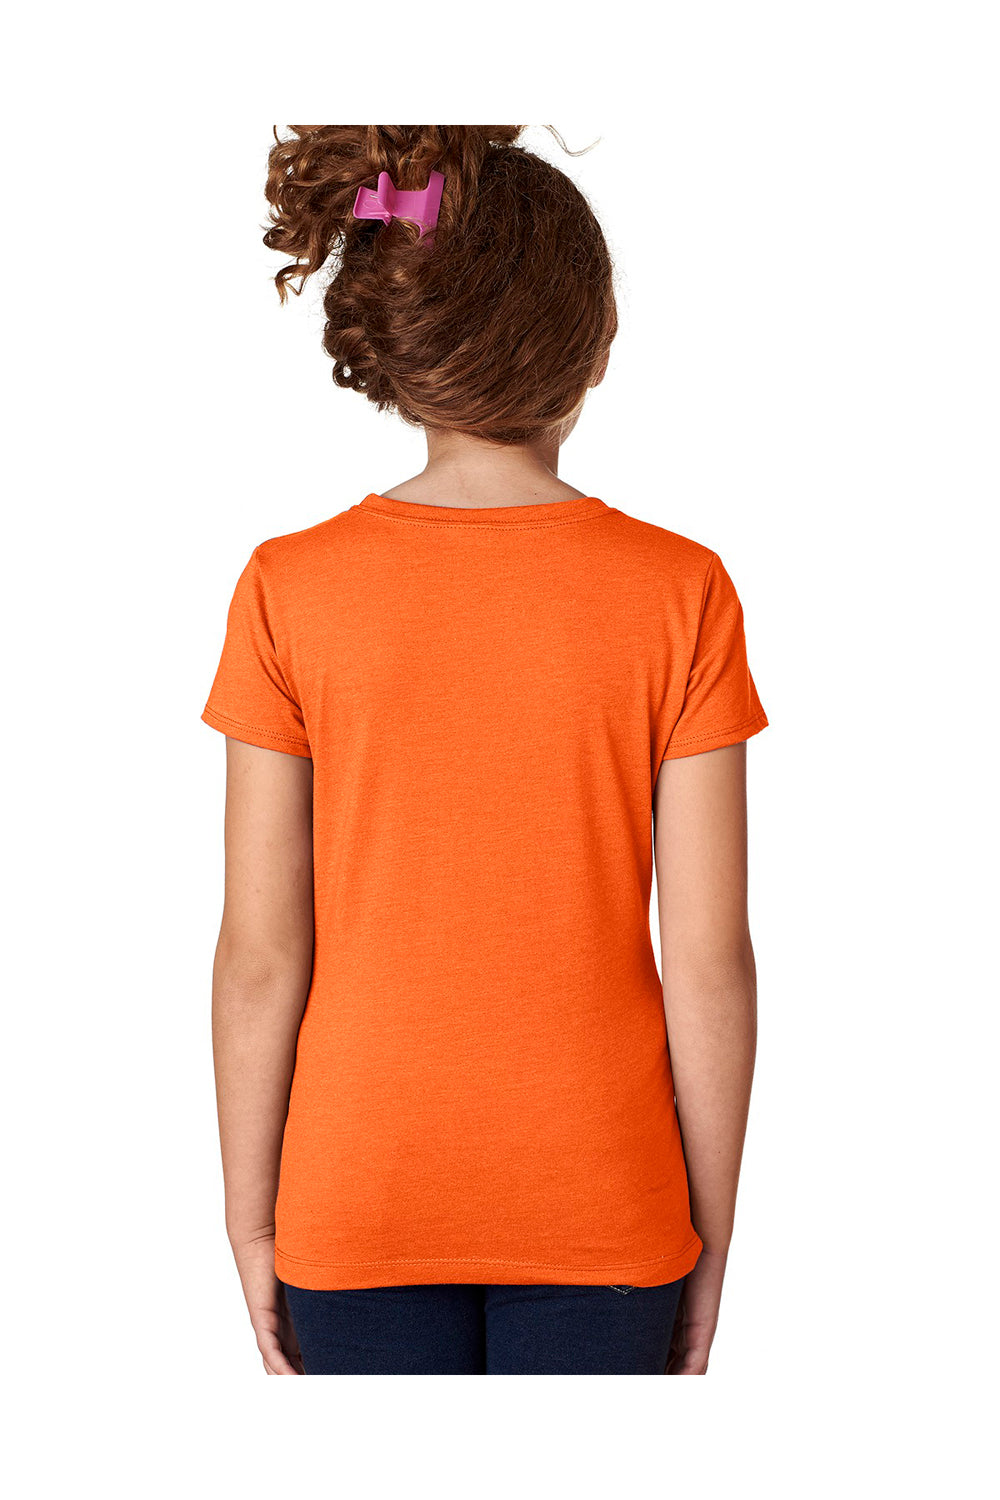 Next Level 3712 Youth Princess CVC Jersey Short Sleeve Crewneck T-Shirt Orange Back